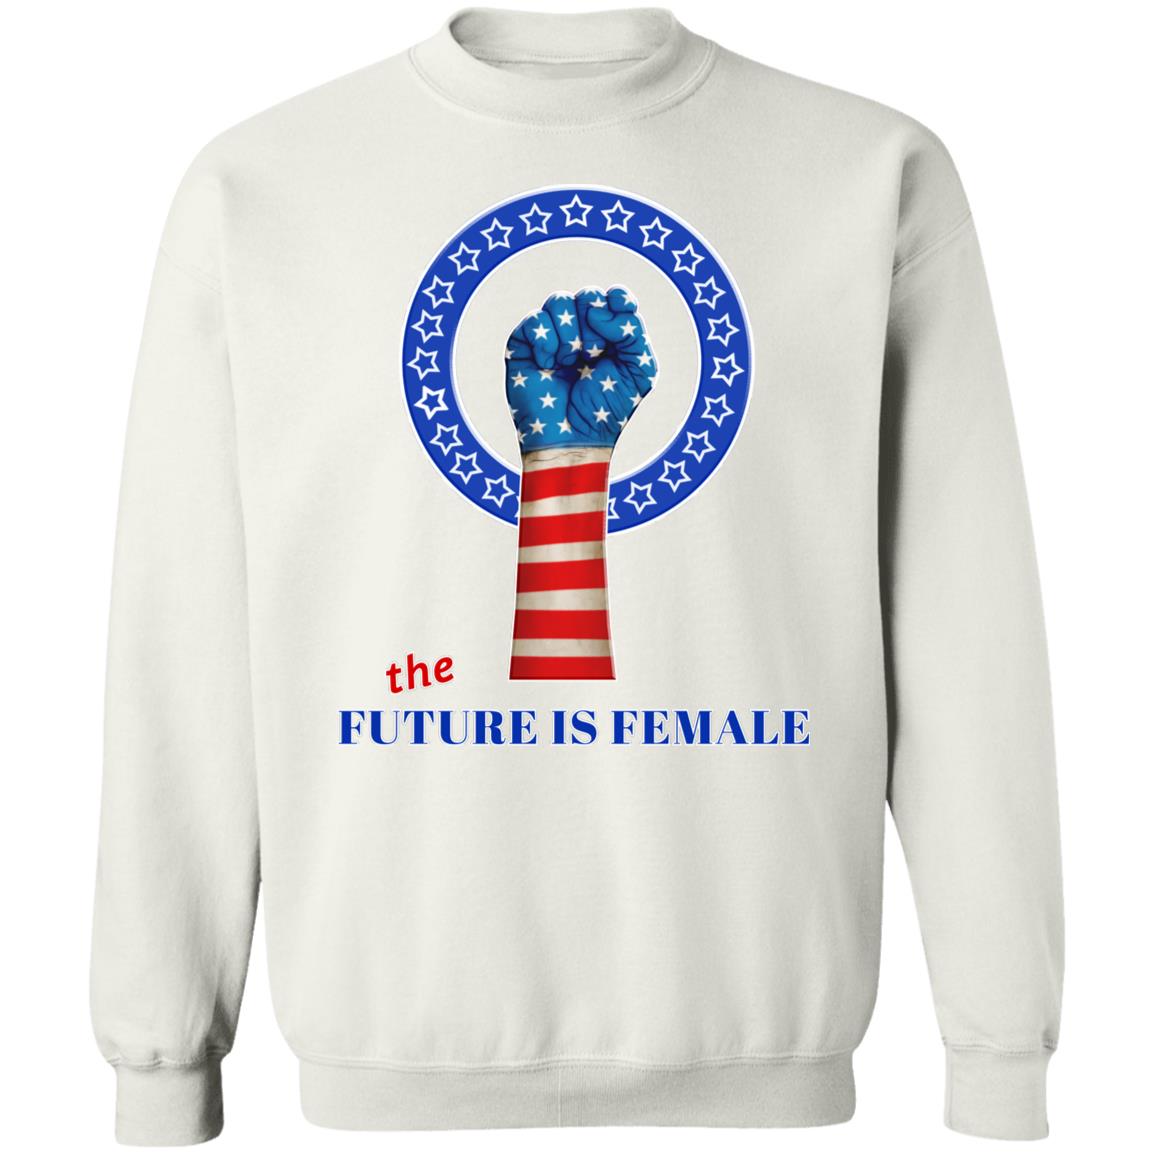 The Future Is Female - Unisex Crew Neck Sweatshirt